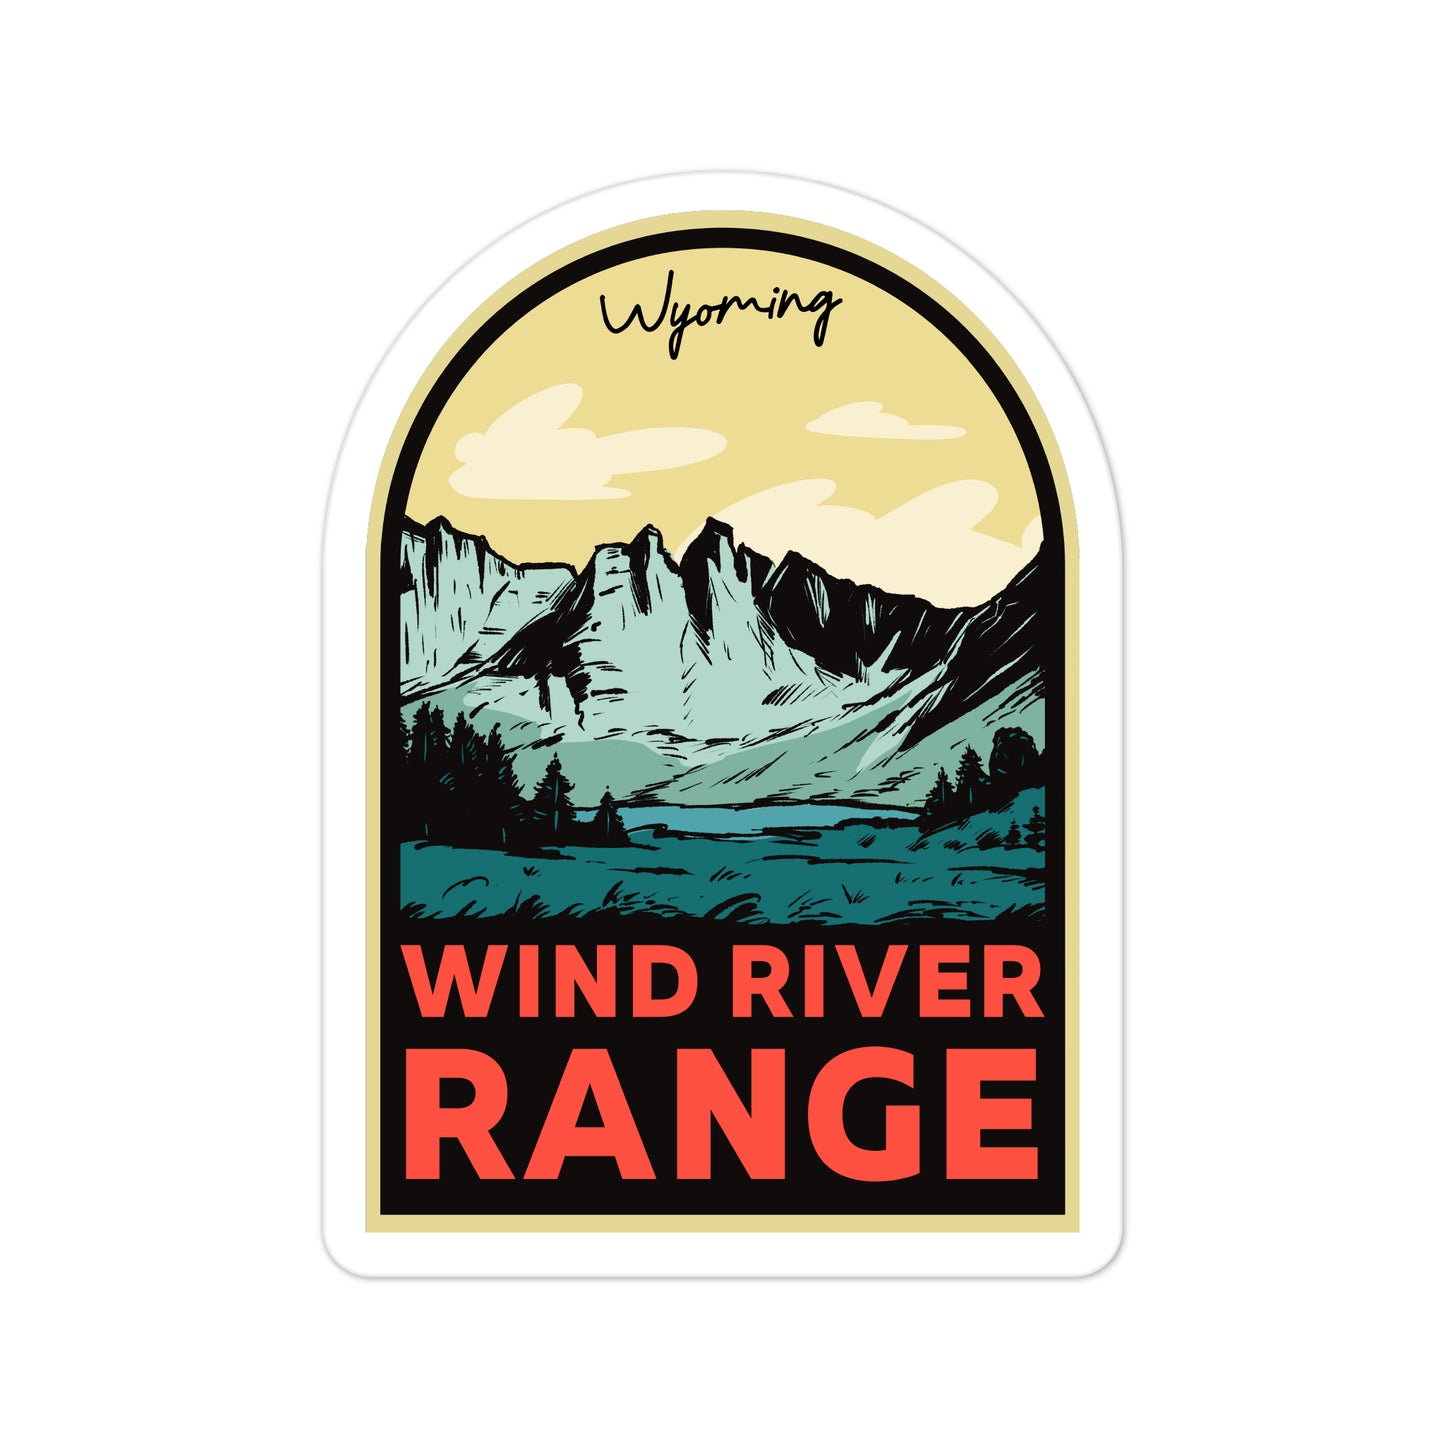 A sticker of Wind River Range